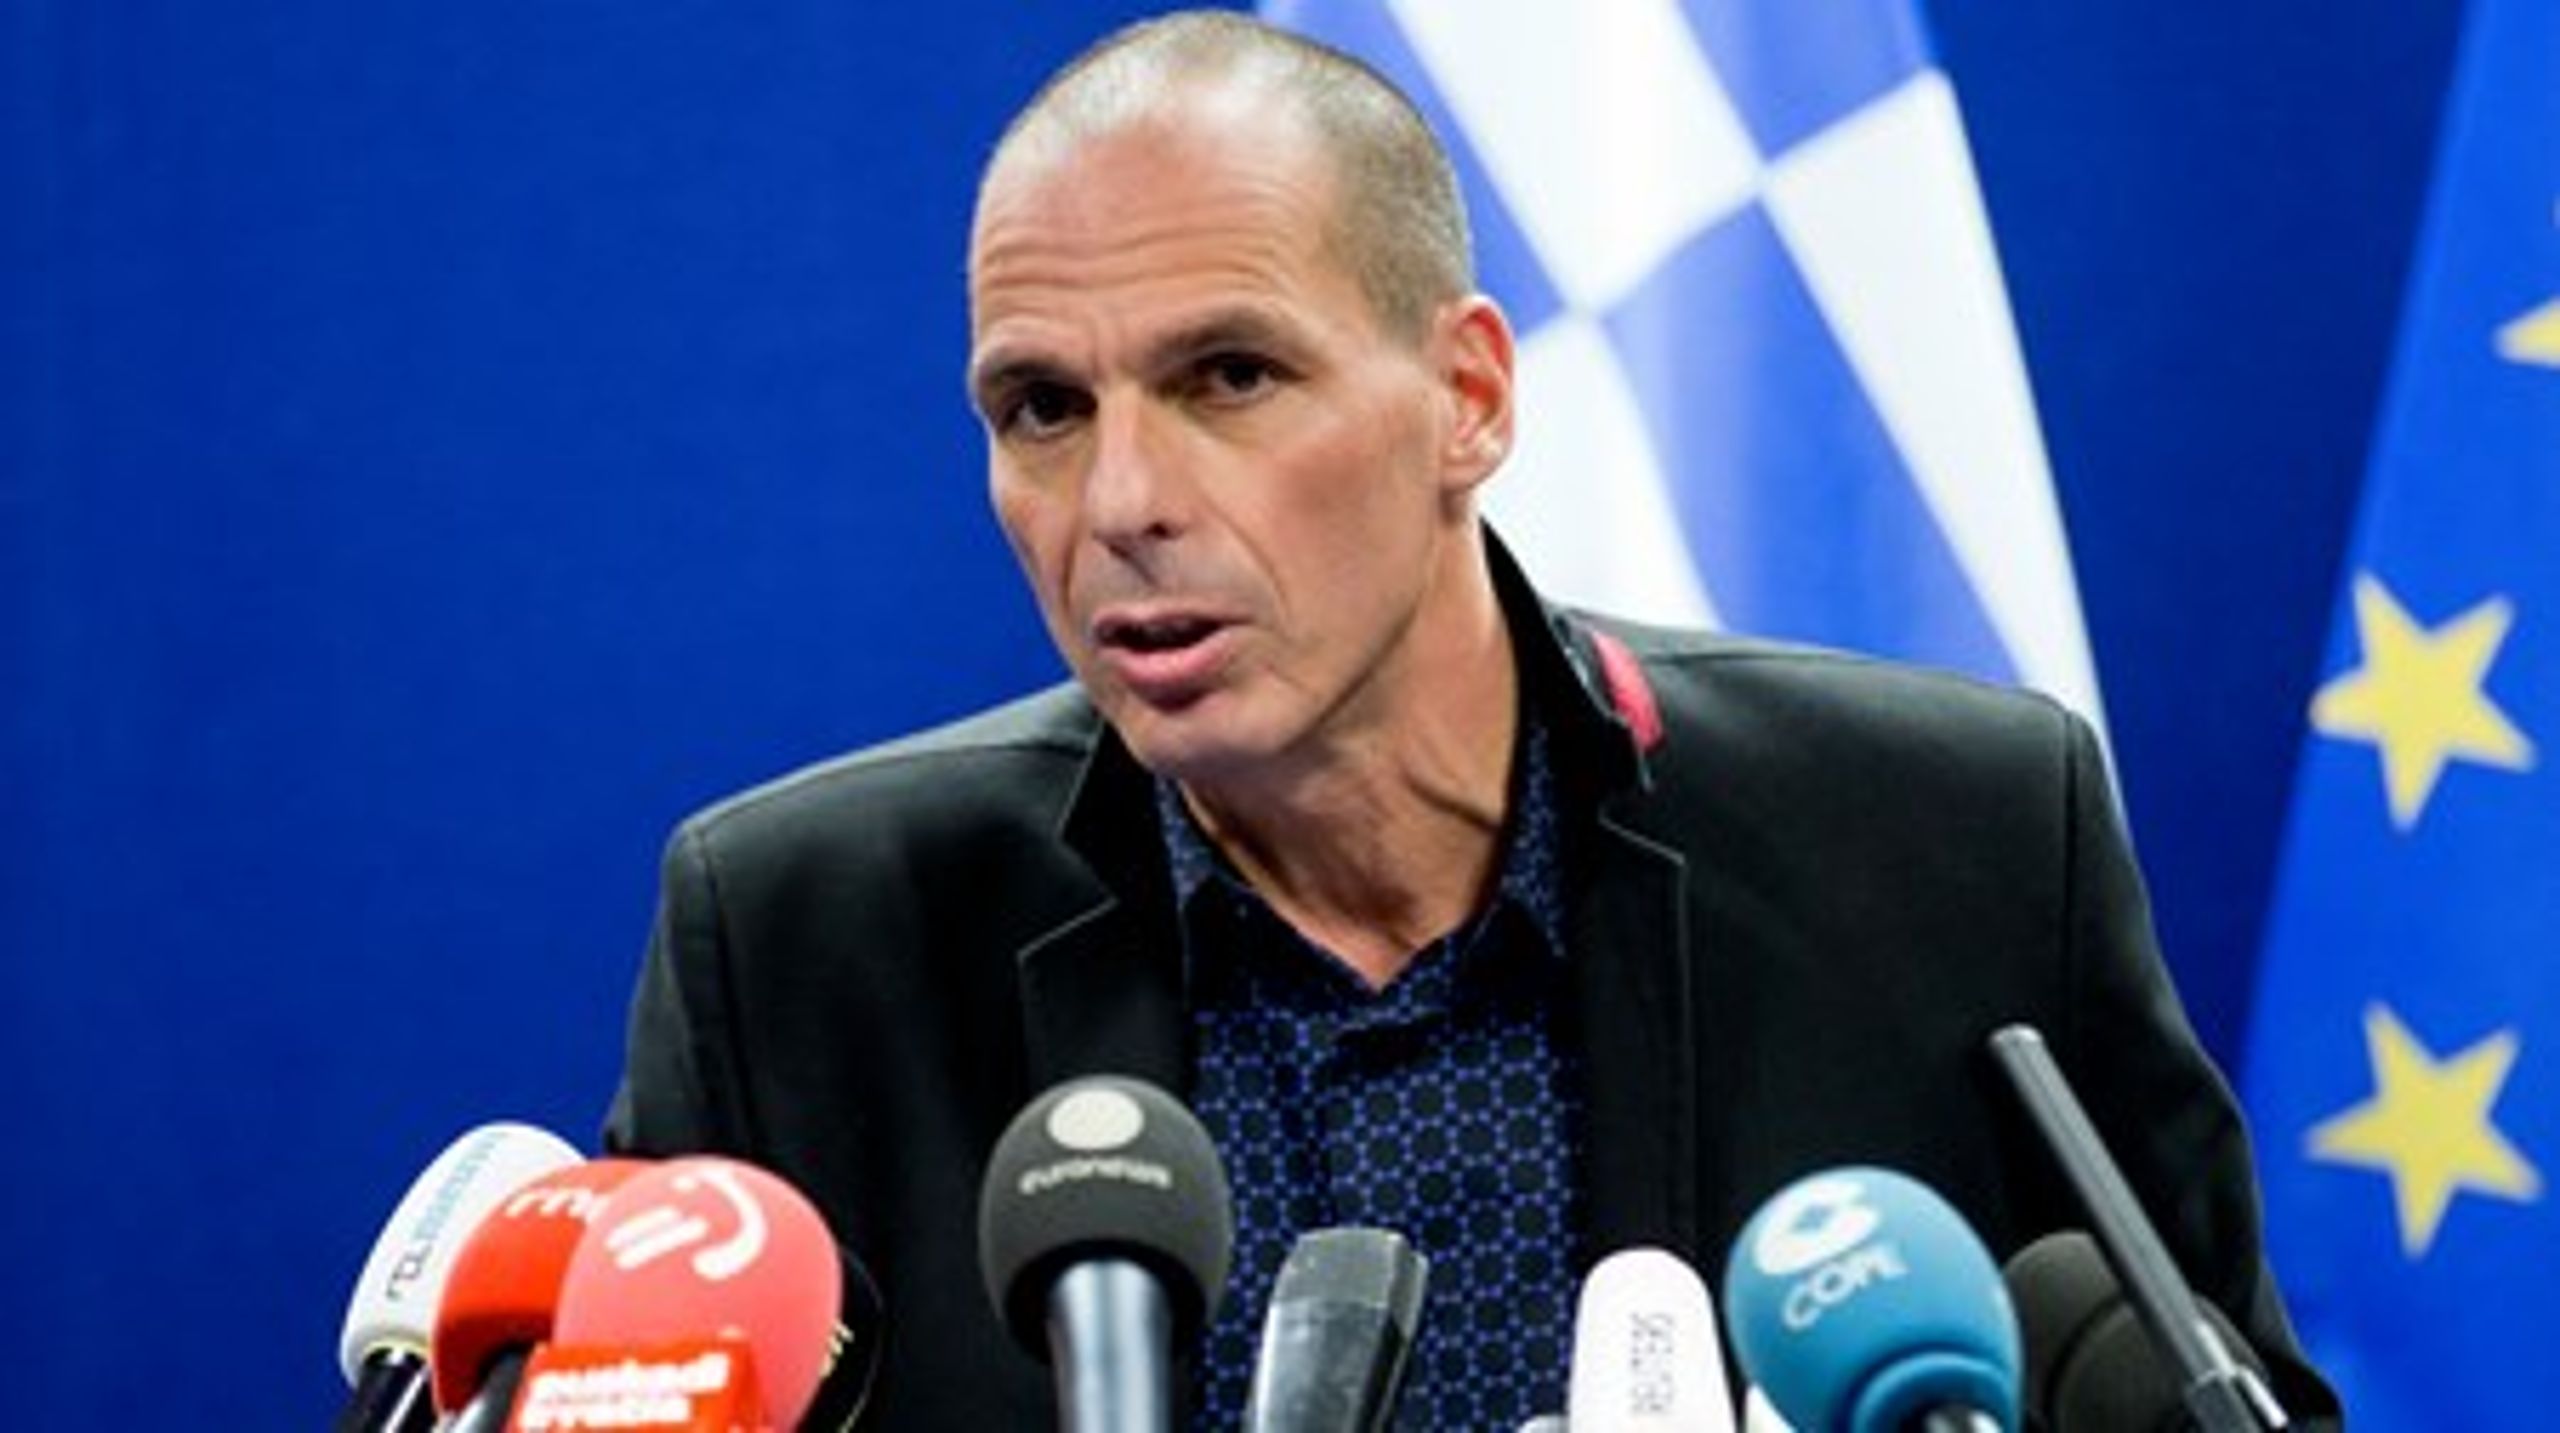 Den nye græske finansminister Yanis Varoufakis har ikke fået mange venner blandt kollegerne i EU-kredsen.